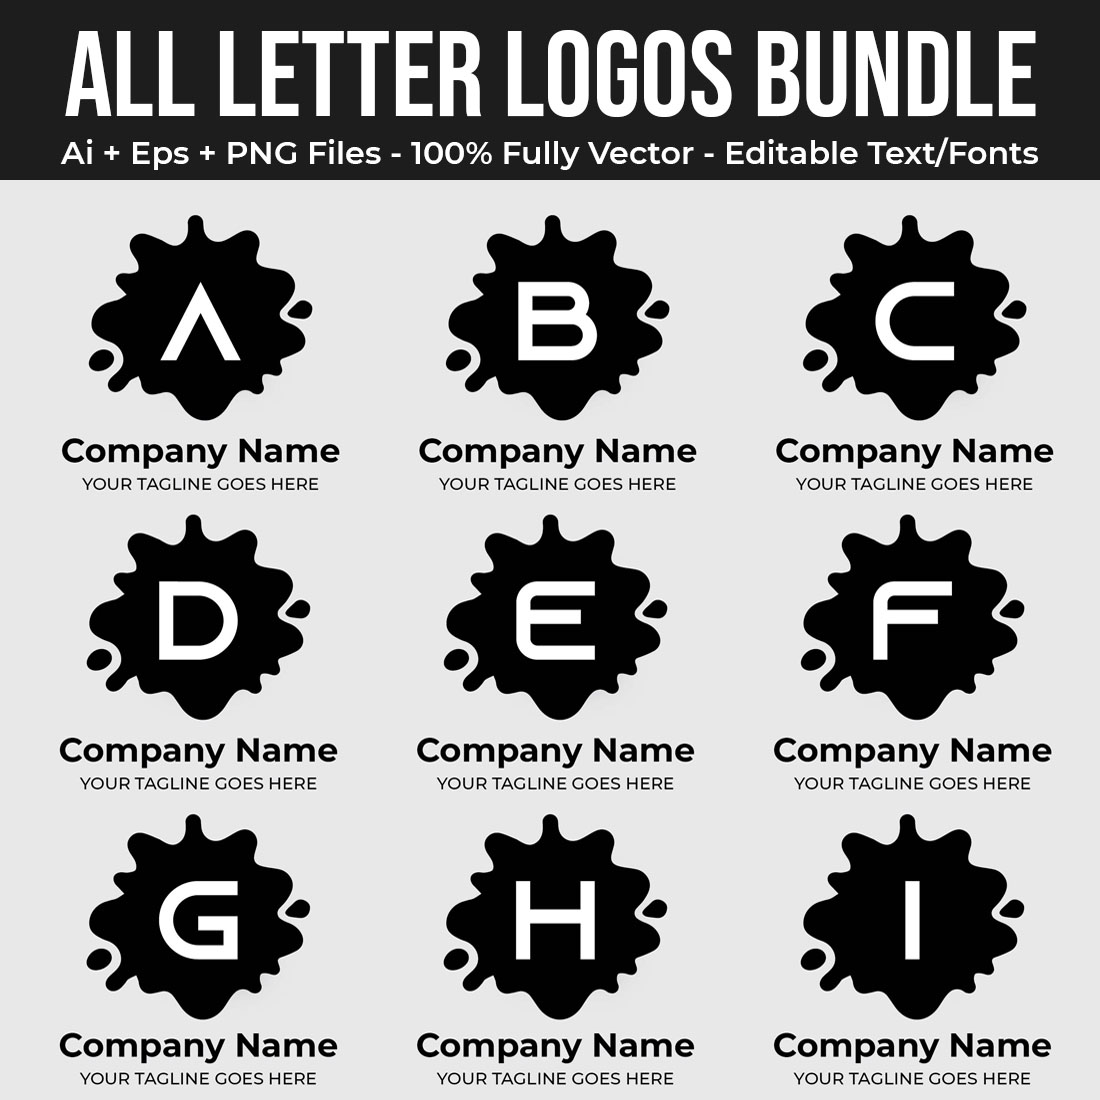 All Letter Logos Bundle cover image.